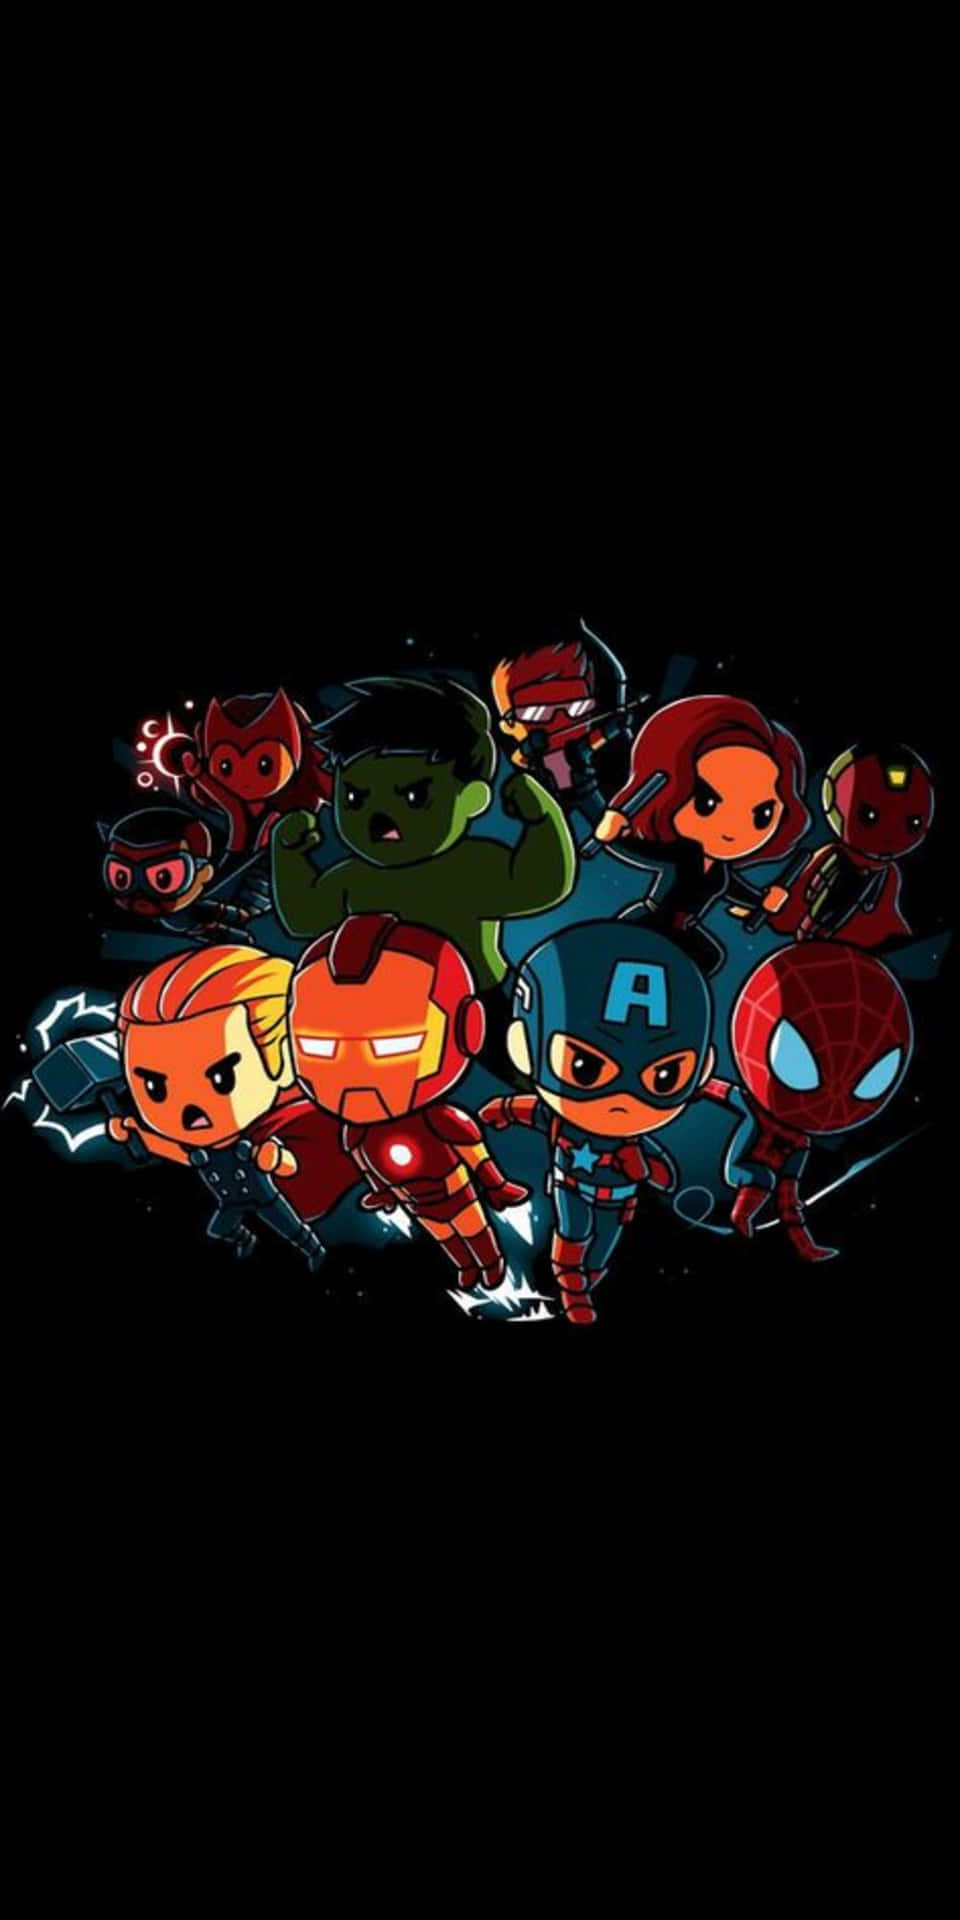 Cute Chibi Pixel 3 Marvel's Avengers Background